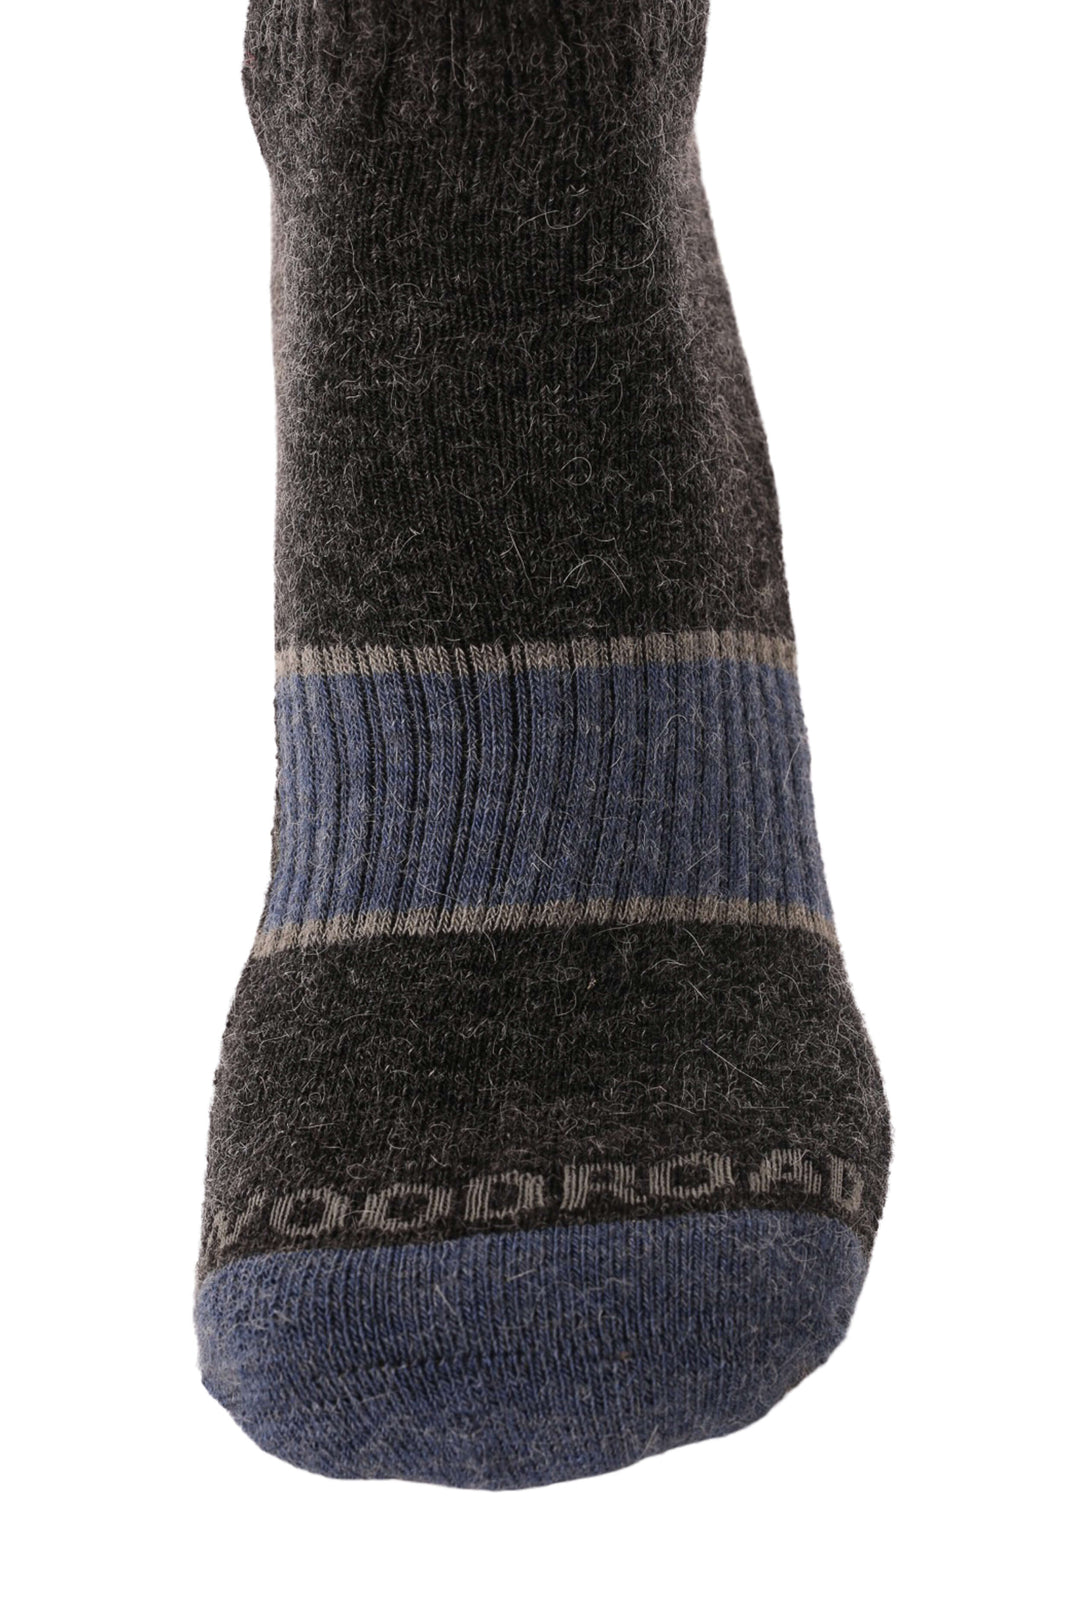 Nada Llama Quarter Socks - Alpaca Socks - Midnight Grey with Blue - Woodroad Gear Co.